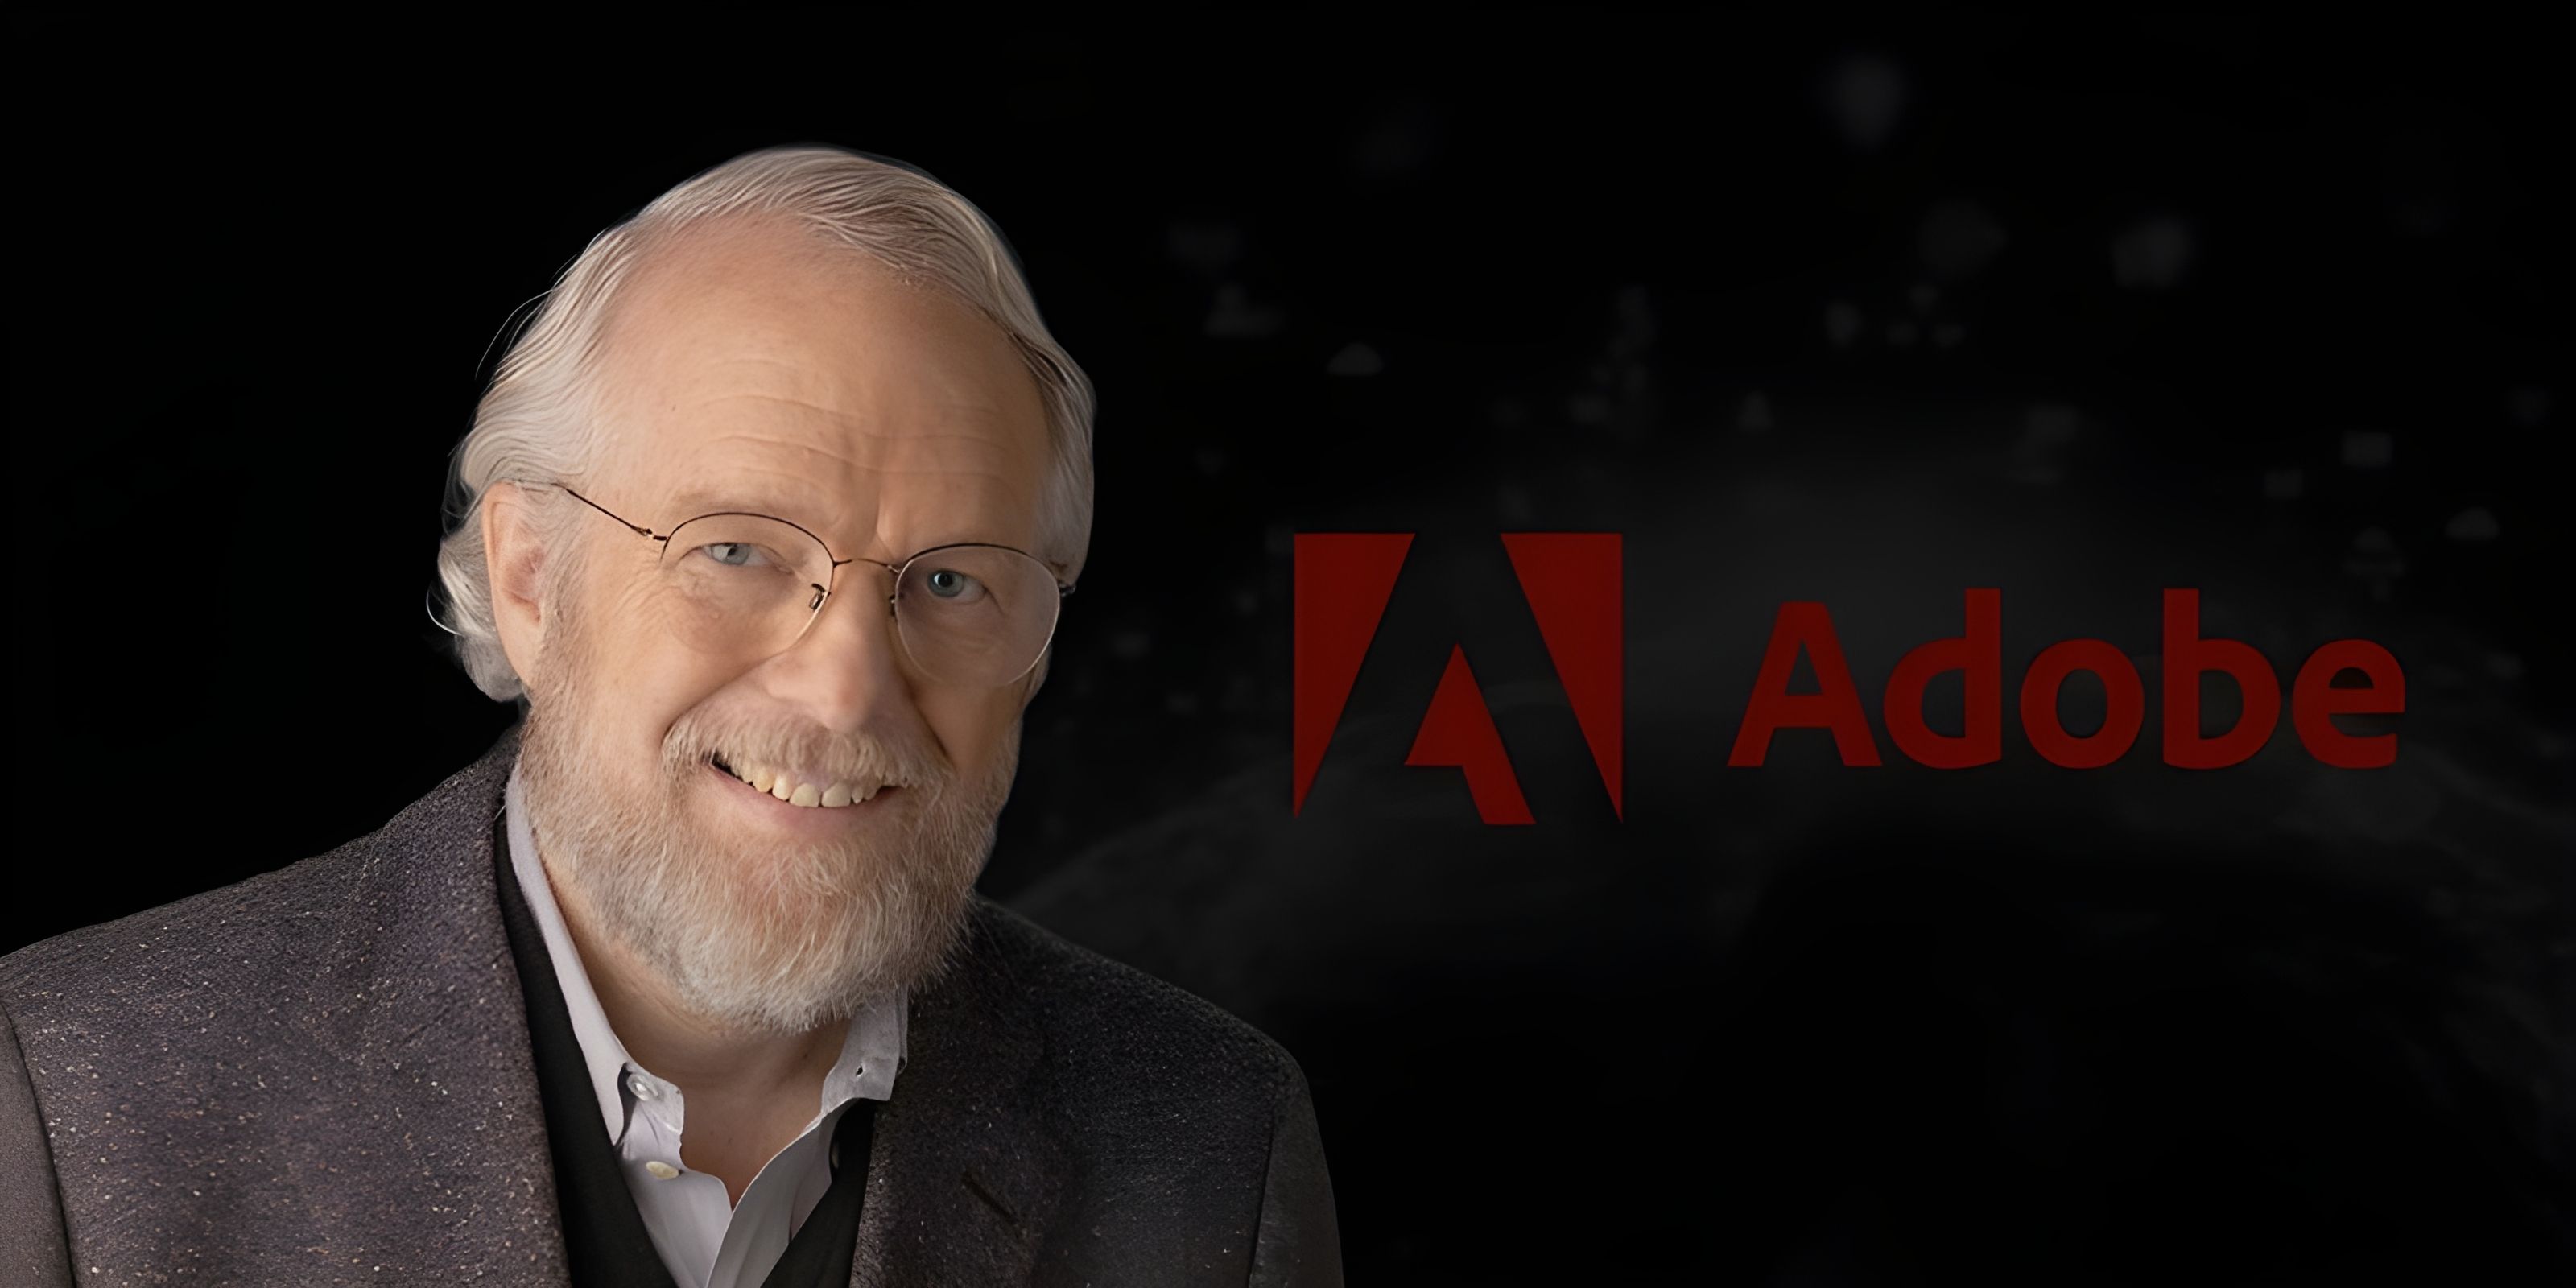 Adobe's Co-Founder, Dr. John Warnock, Dies at 82